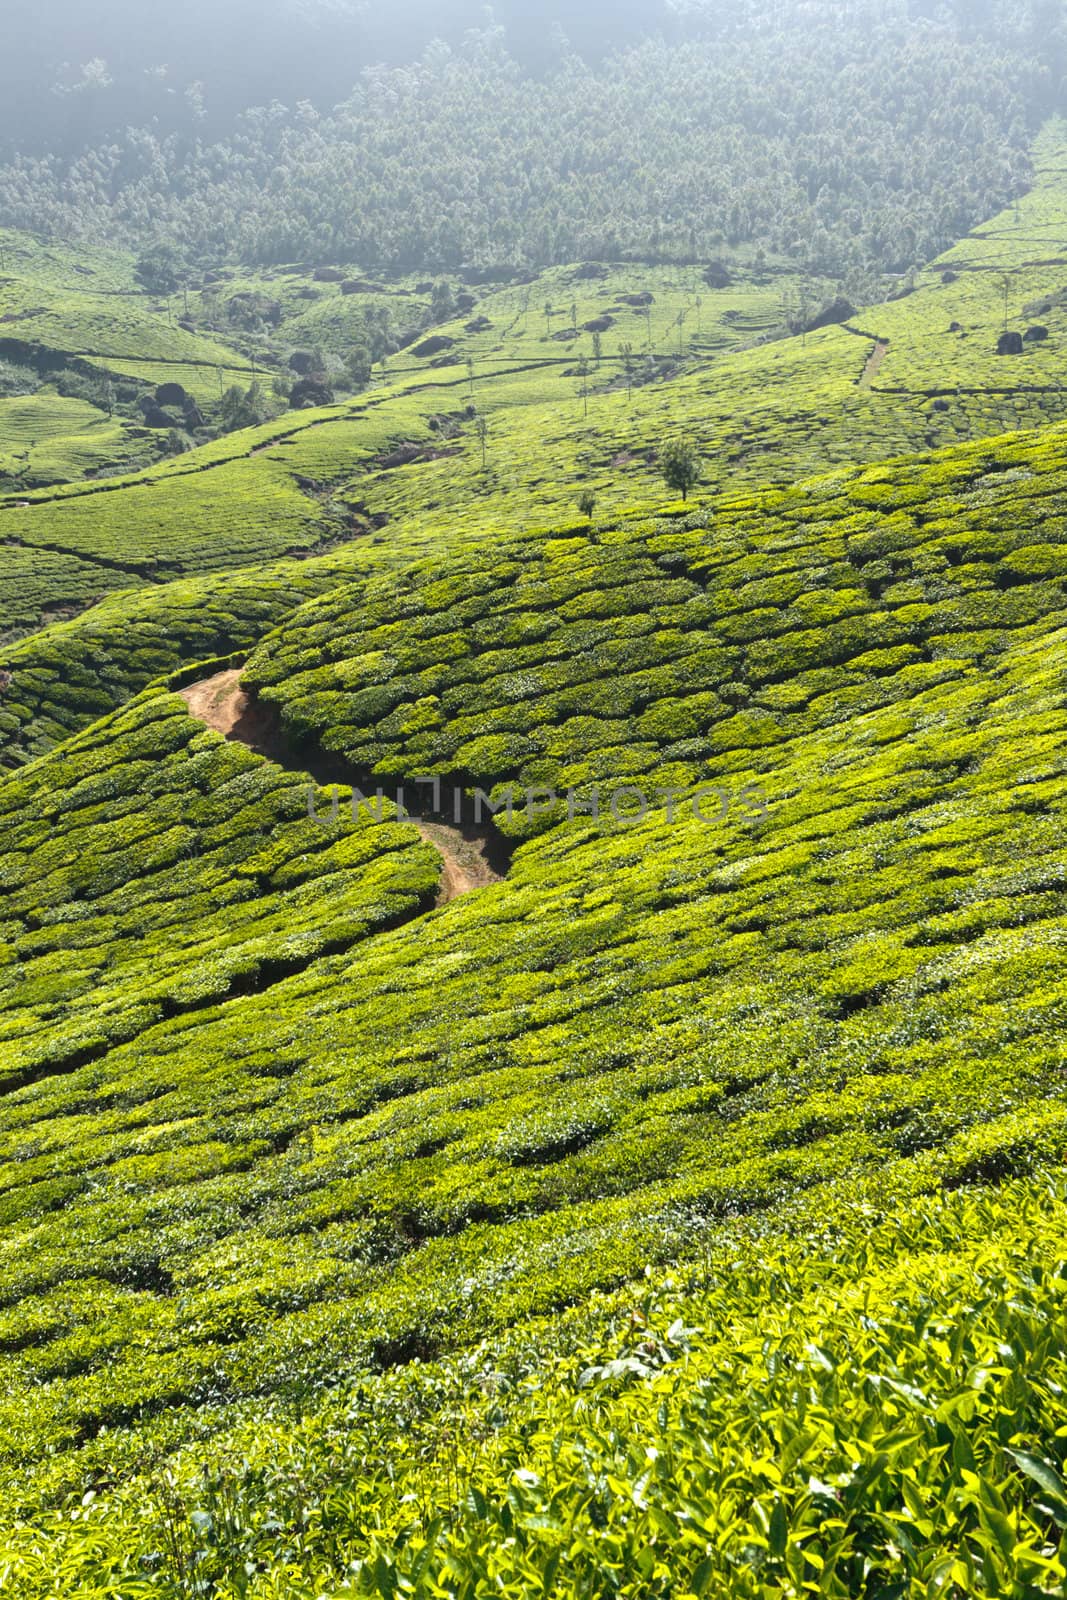 Tea plantations by dimol